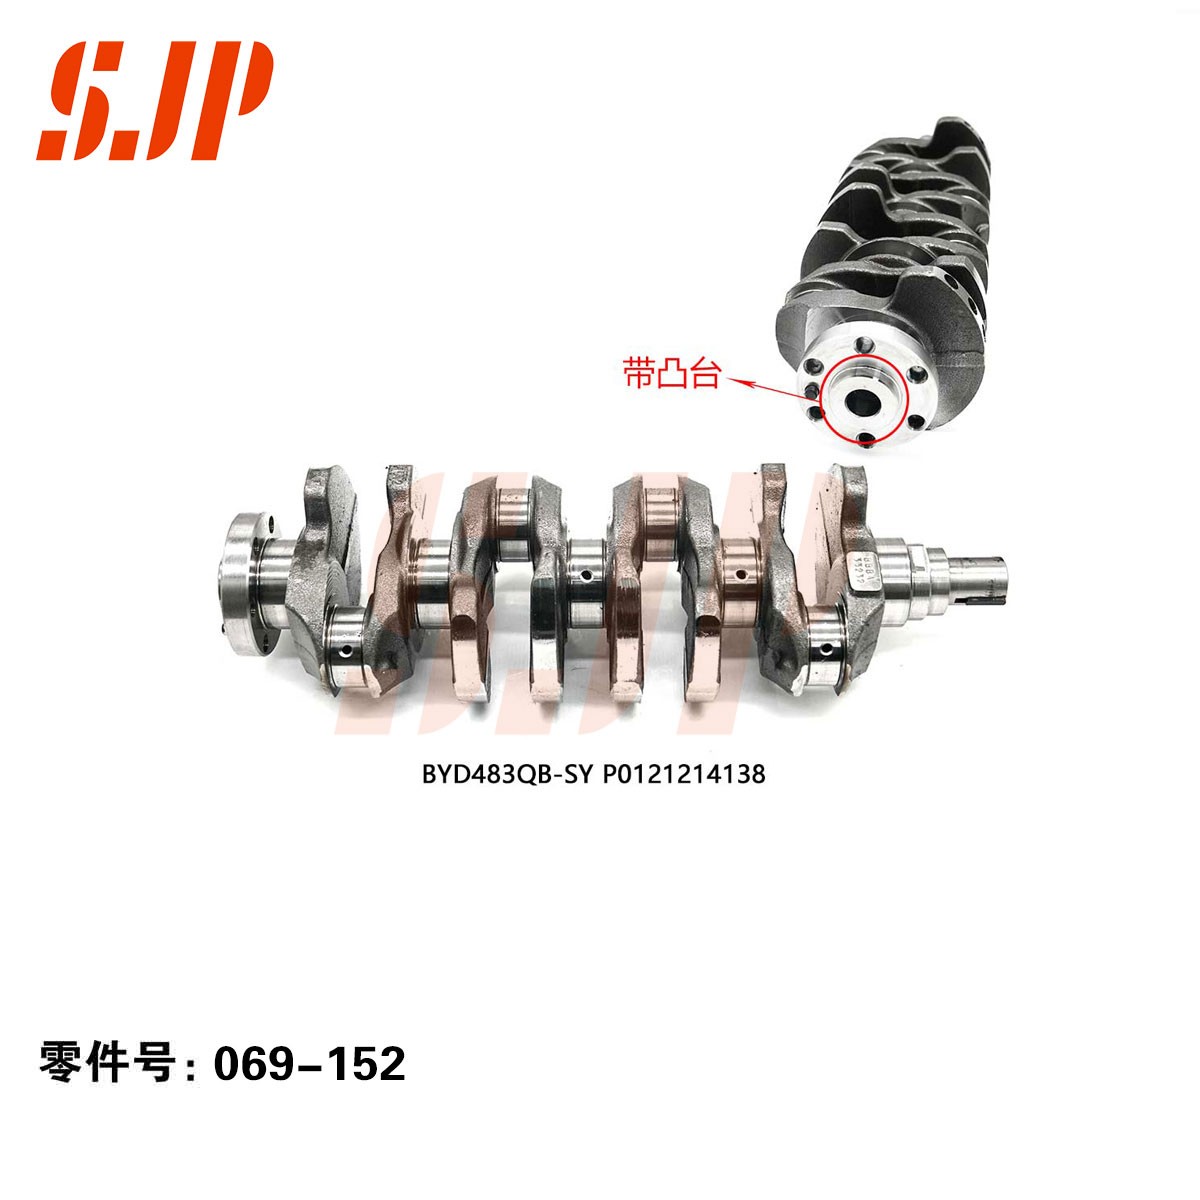 SJ-069-152 Crankshaft For BYD483QB/Convex Plate